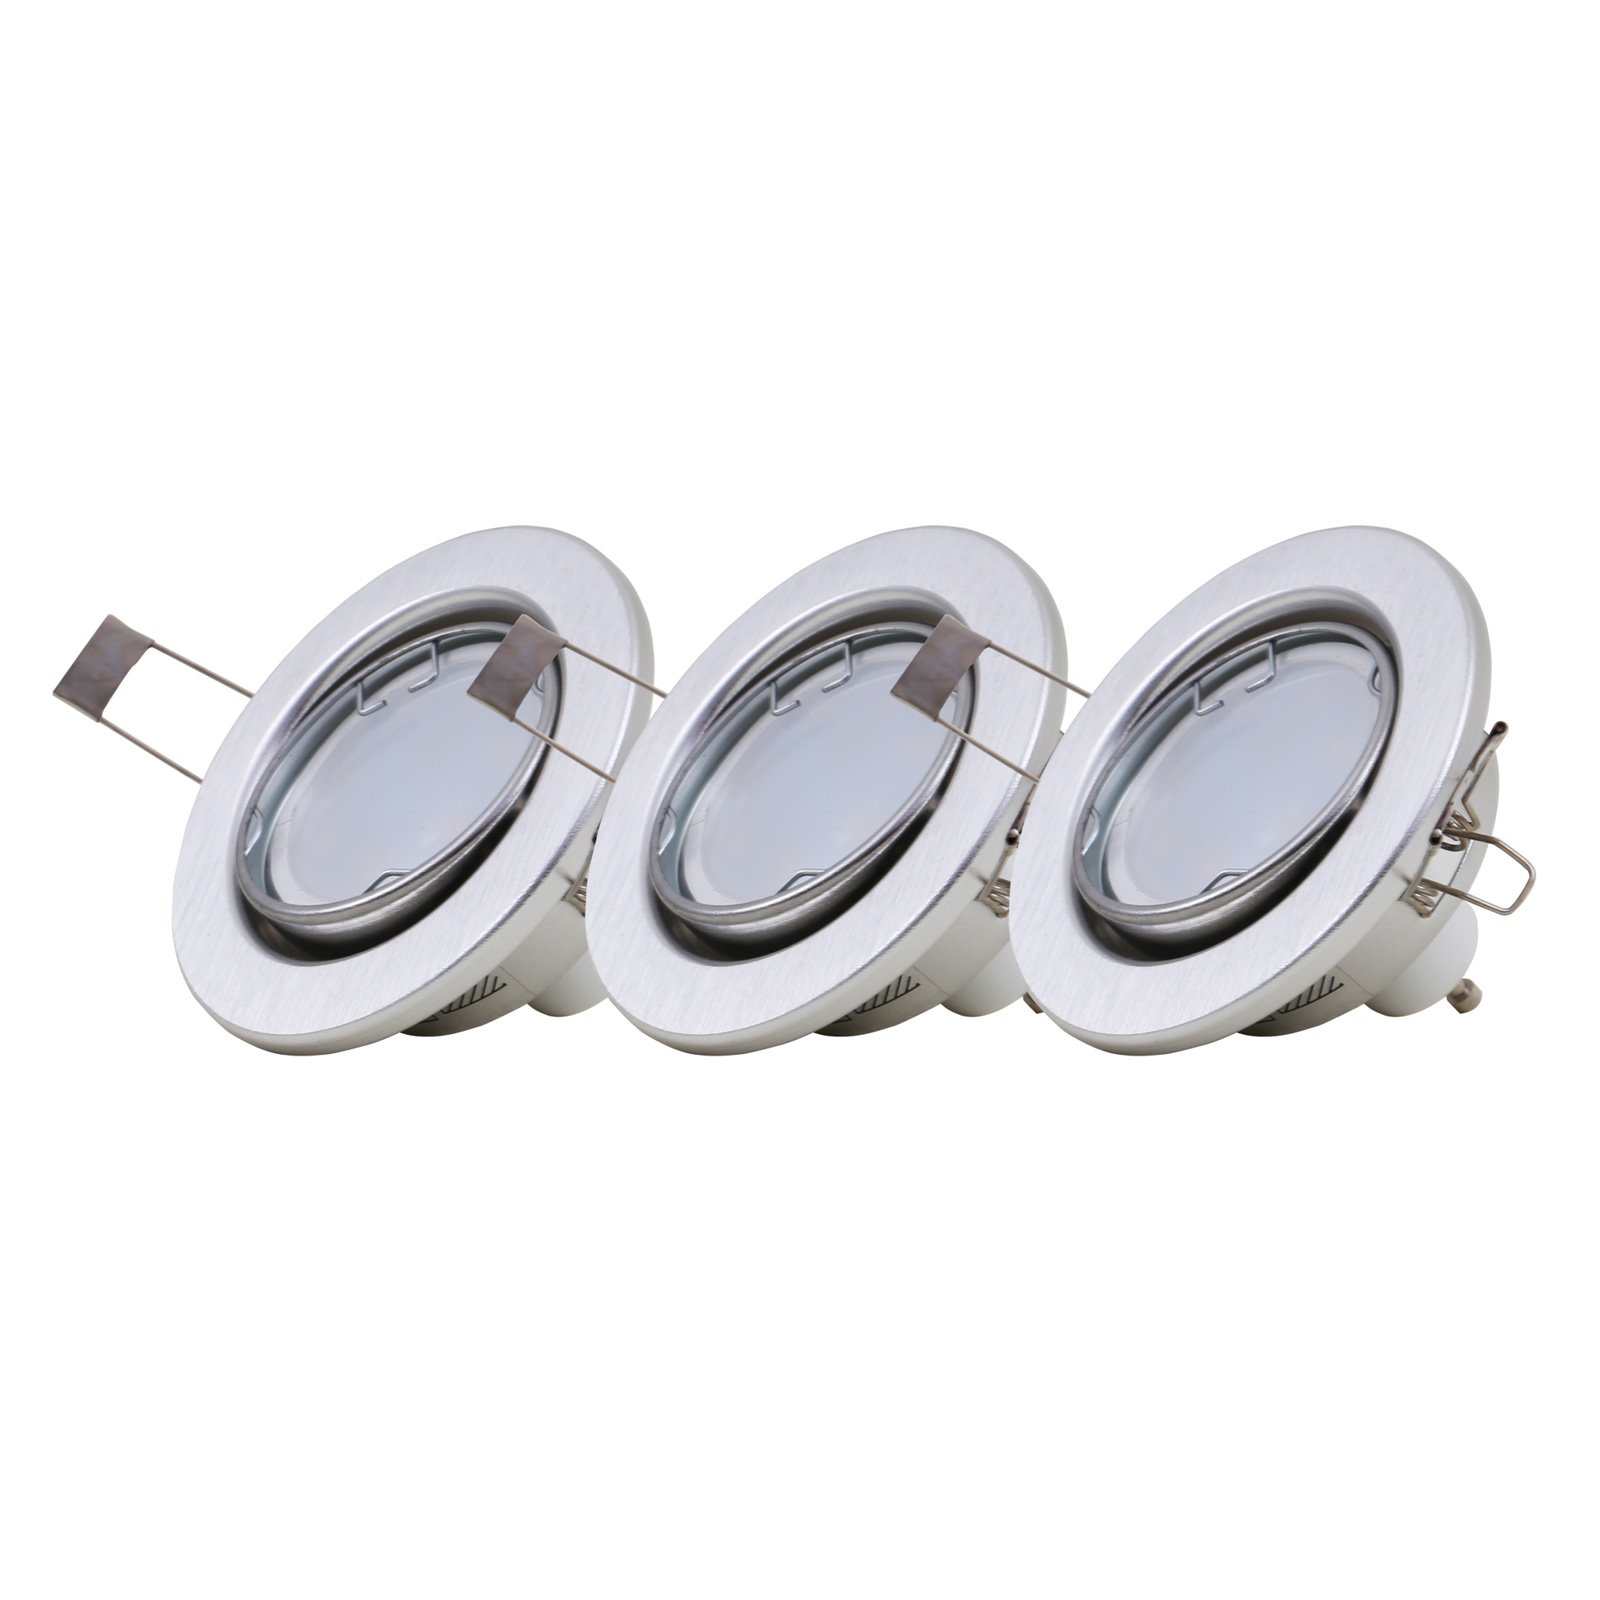 7221-039 Fit LED downlights set of 3, aluminium